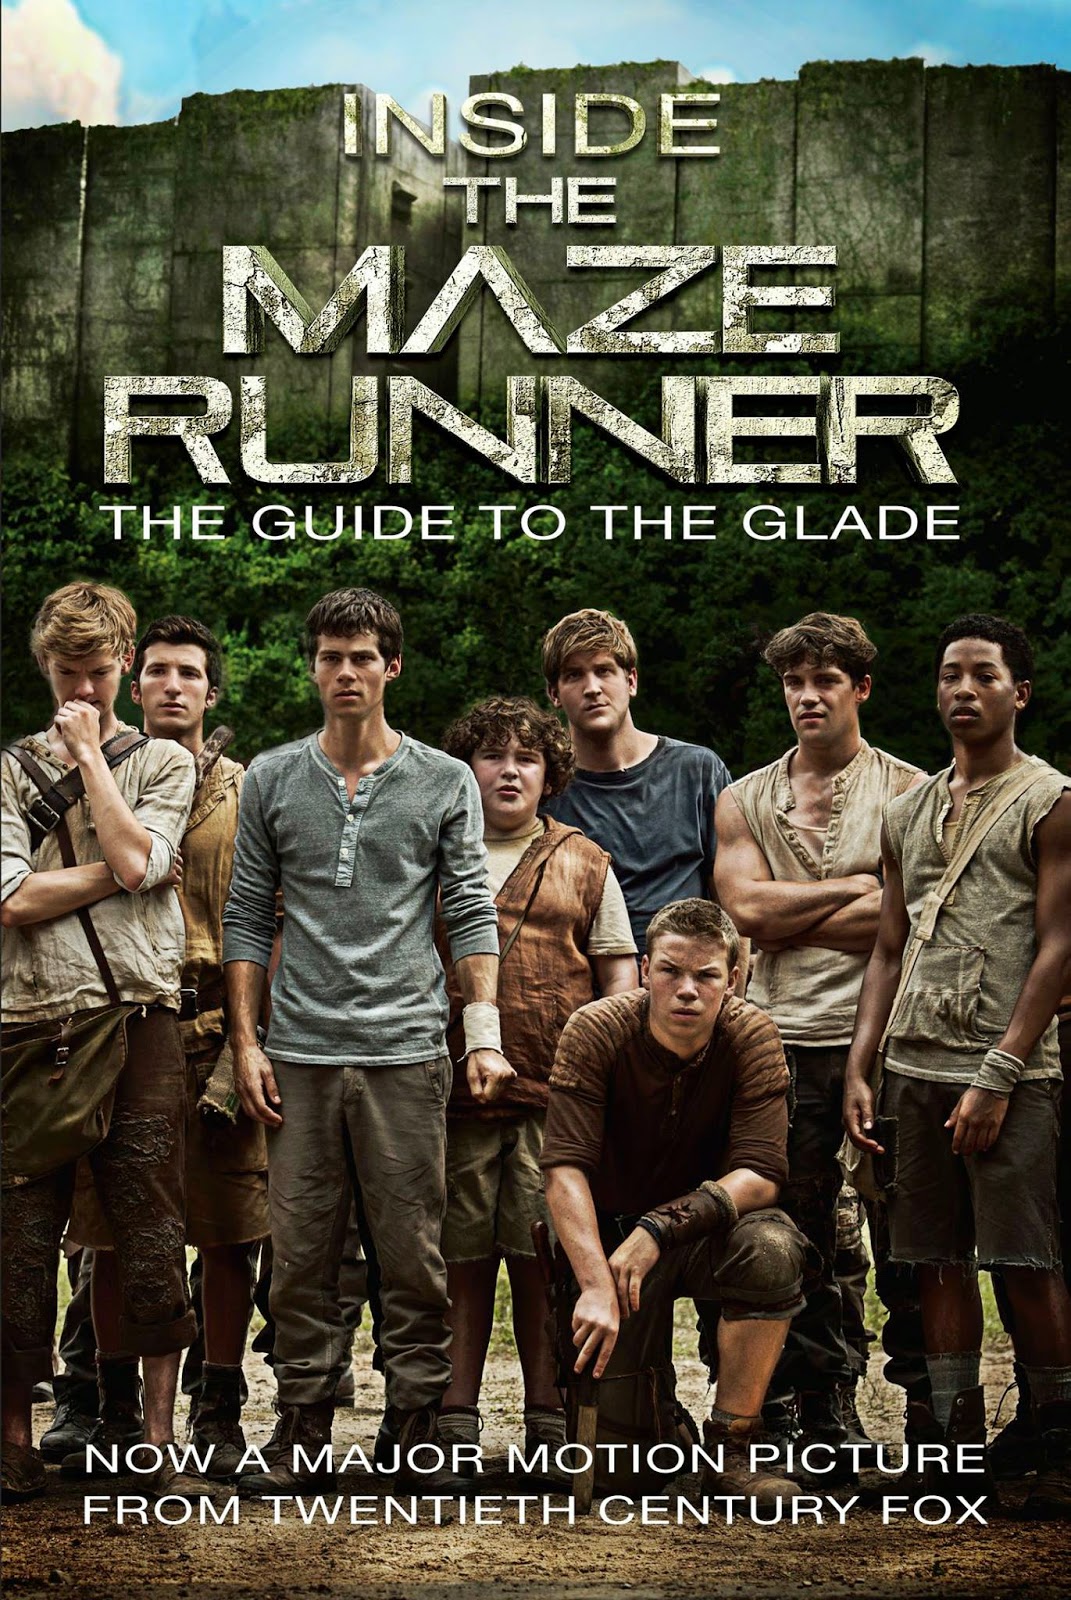 The Maze Runner Blog The Maze Runner Movie TieIn, Guide to the Glade